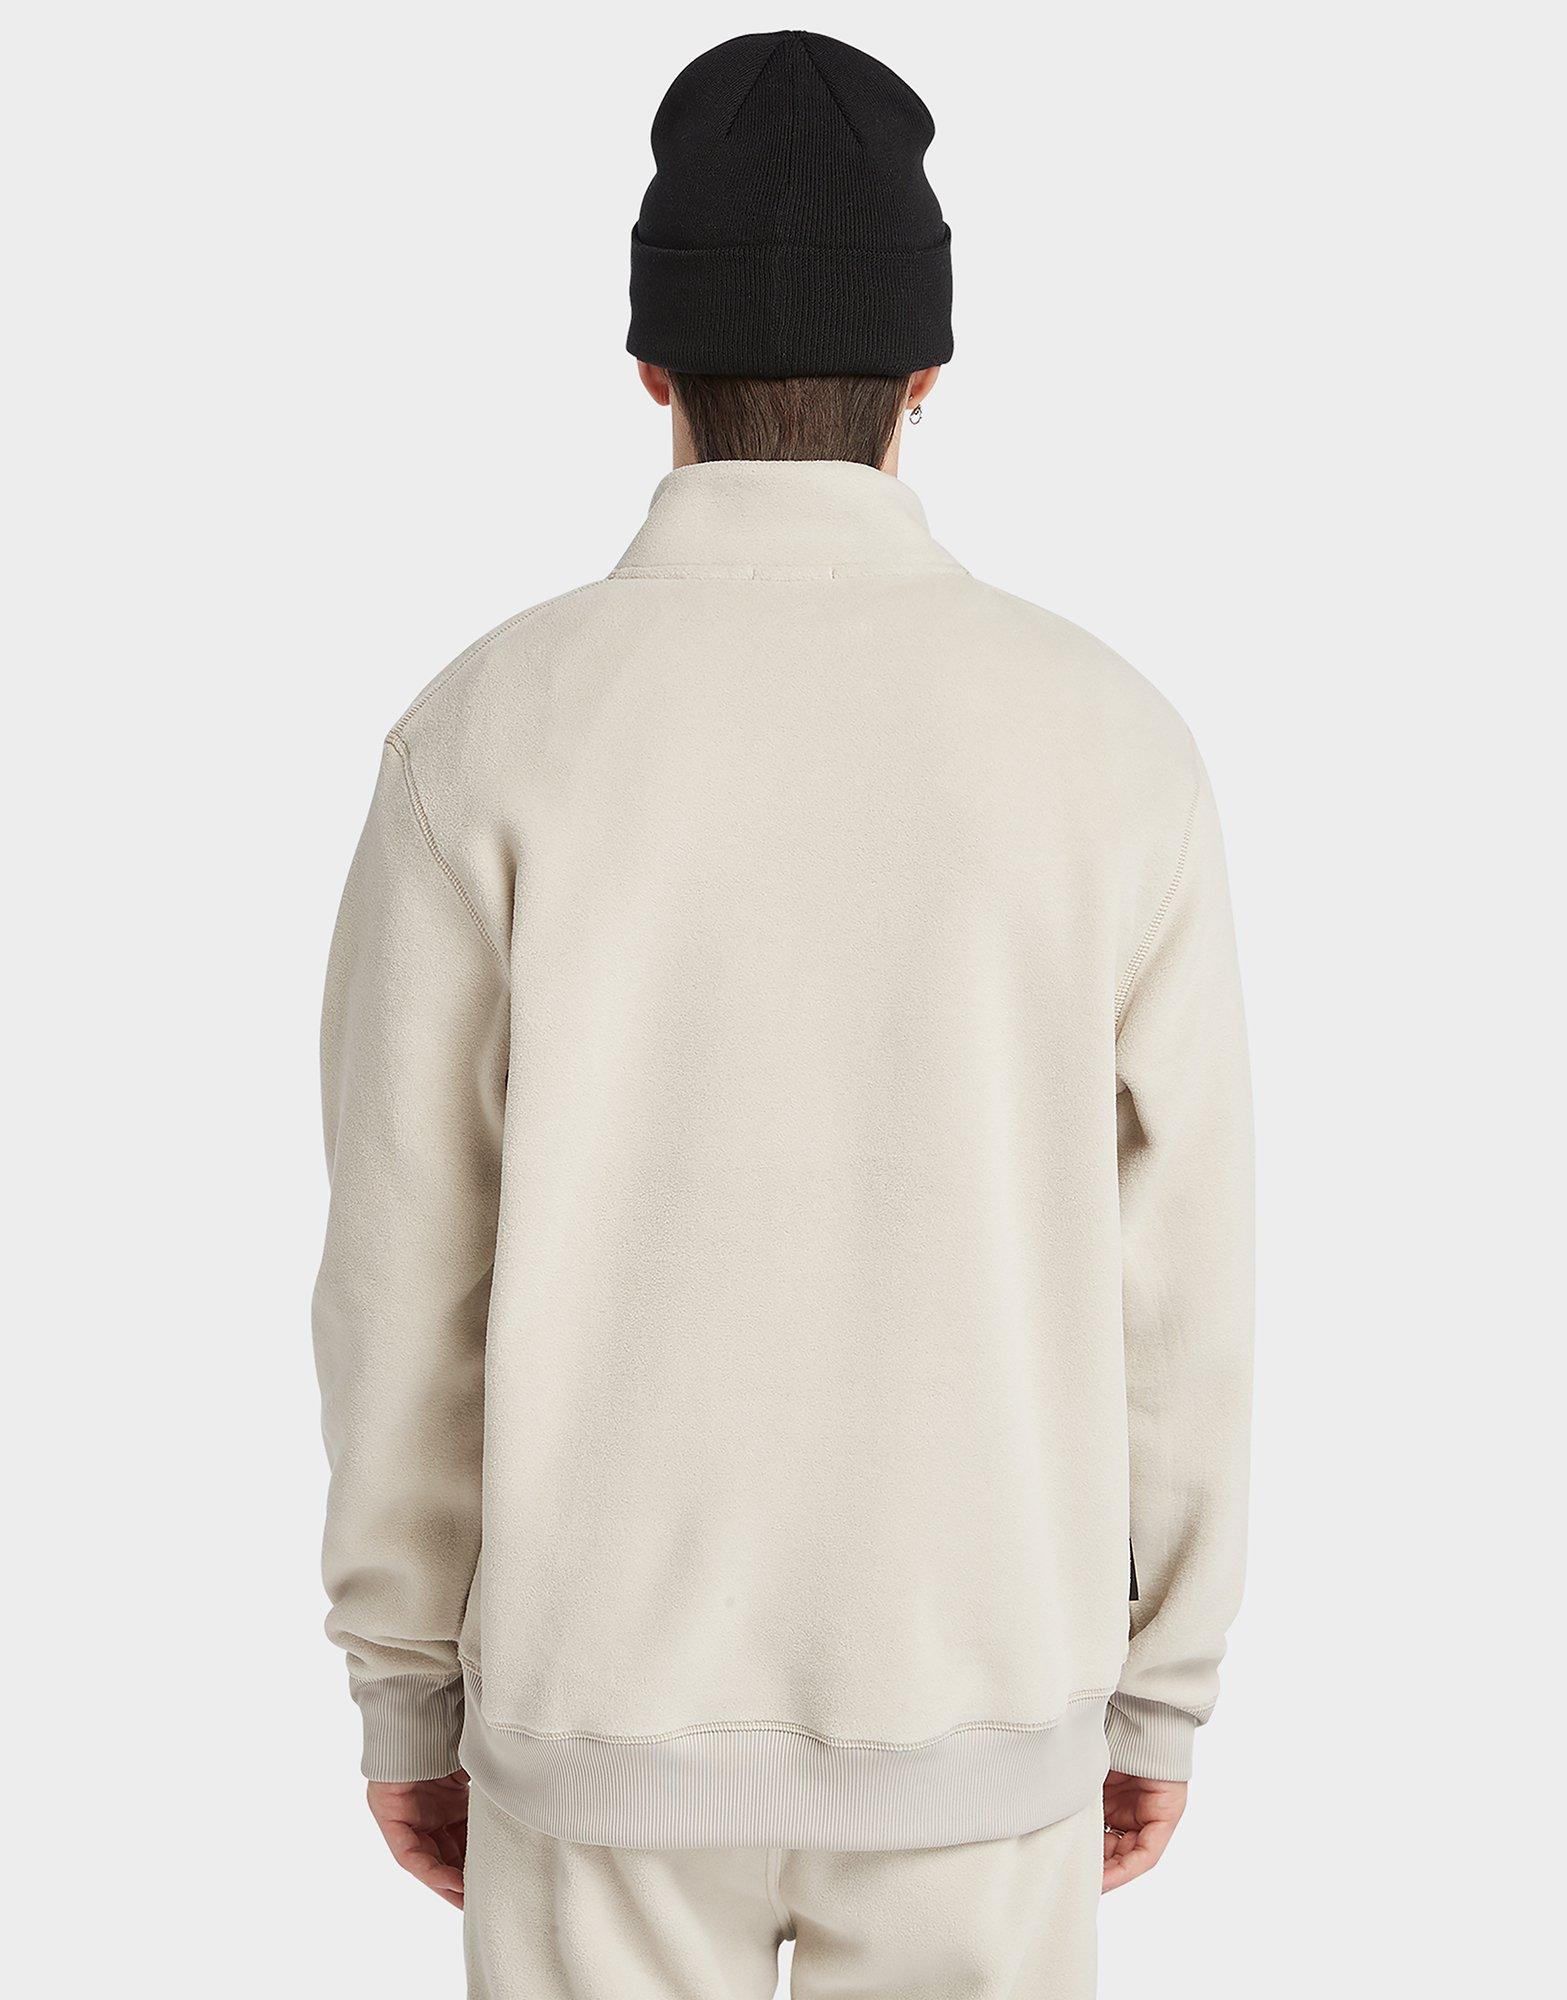 White Timberland 1/4 Zip Sweatshirt with Polartec 200 Series Fleece